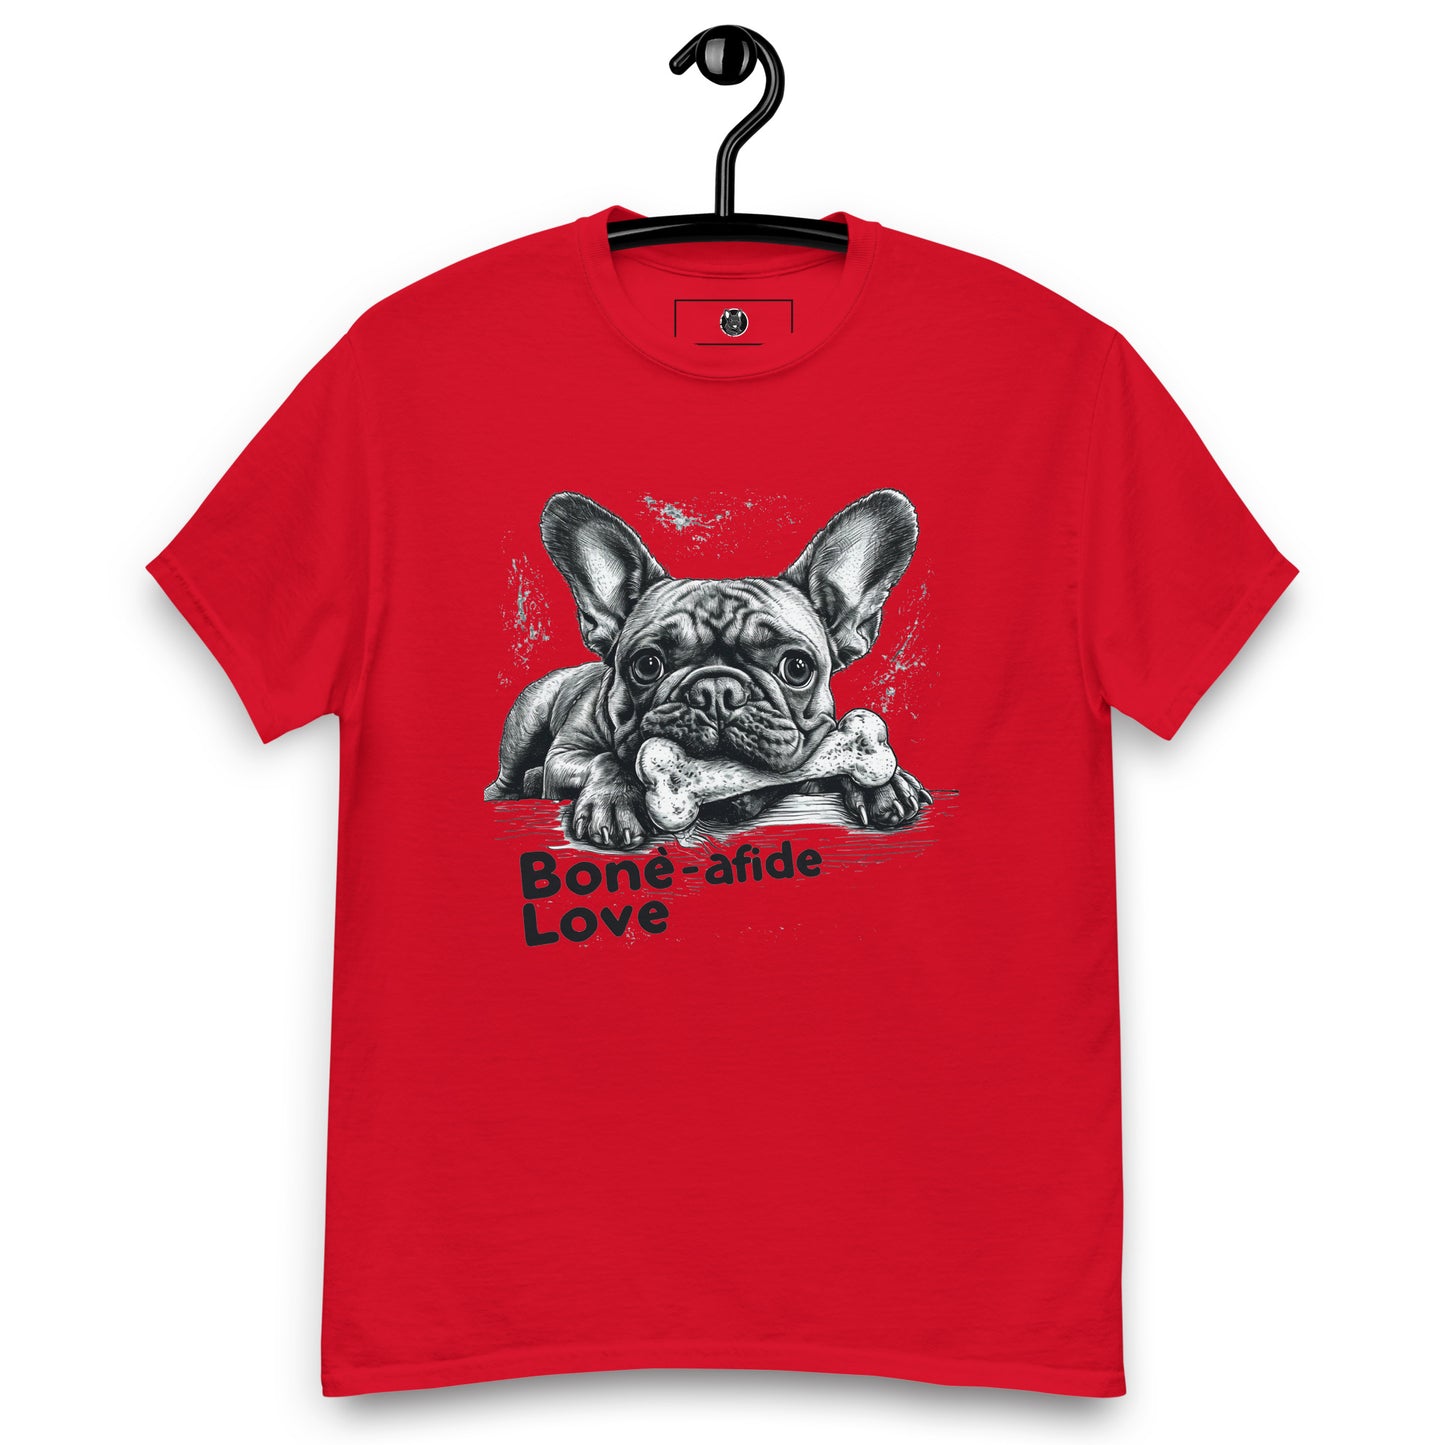 "Bone-afide Love" Unisex T-Shirt